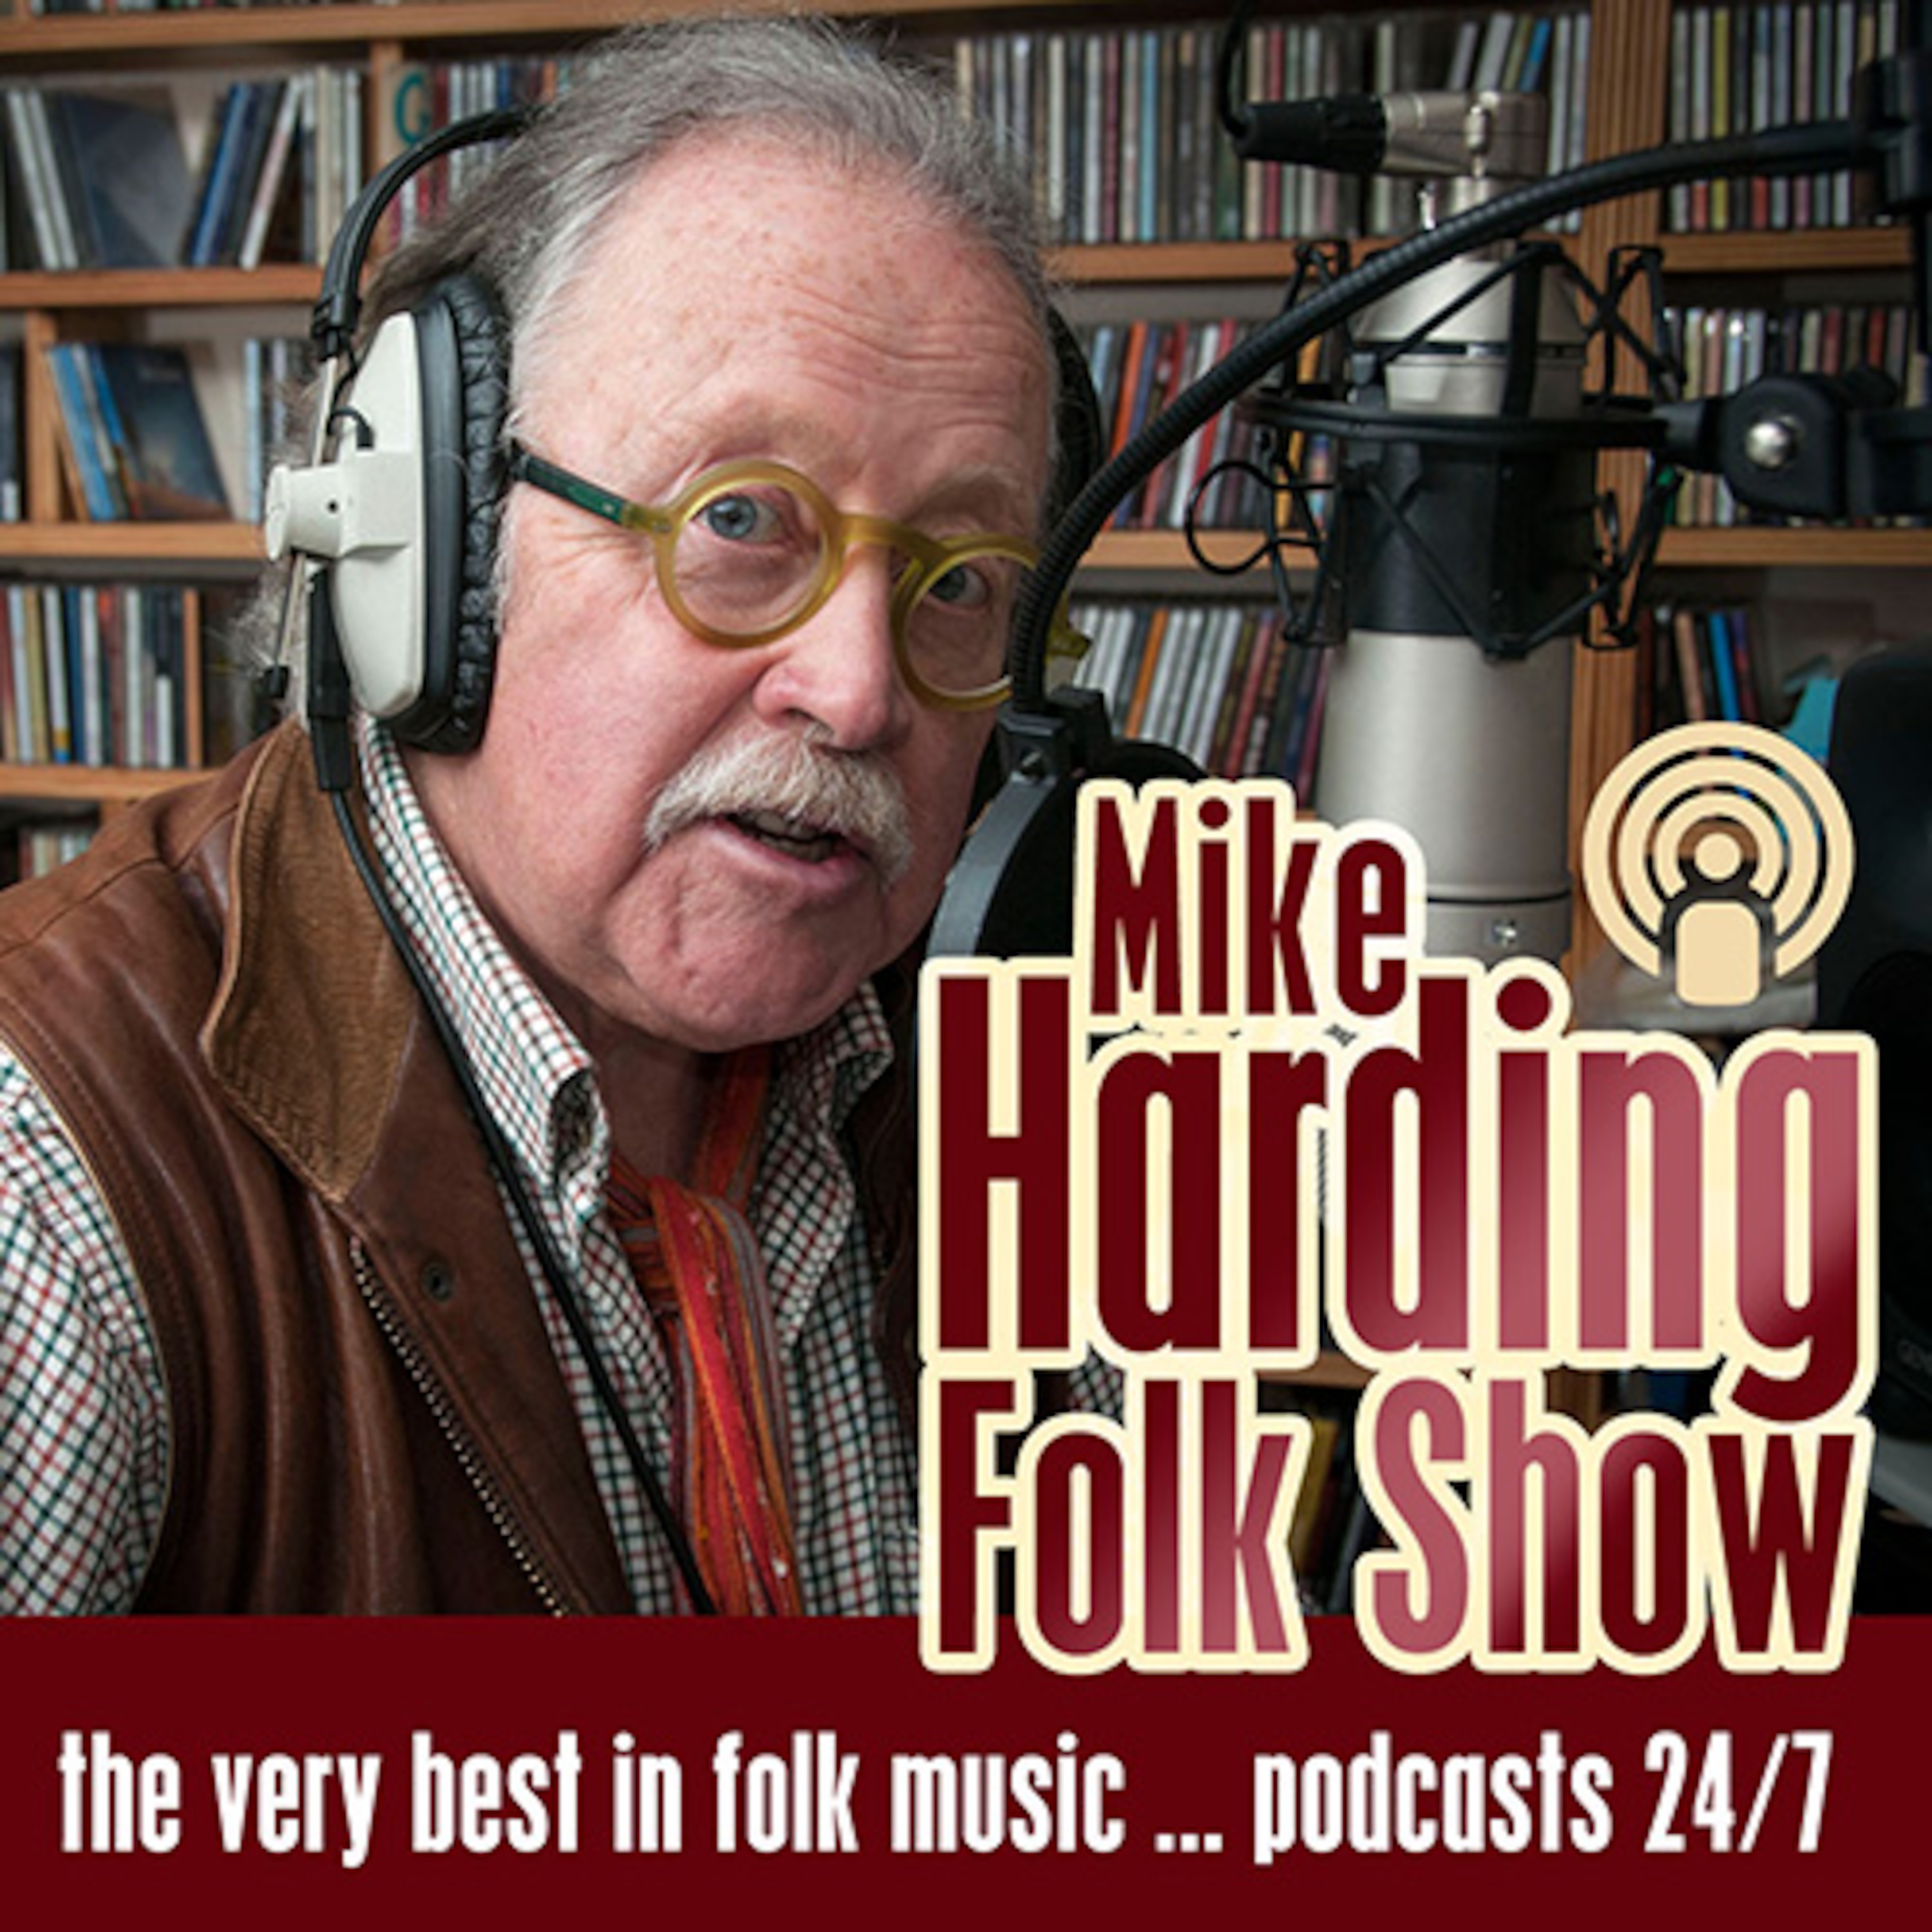 Mike Harding Folk Show 229